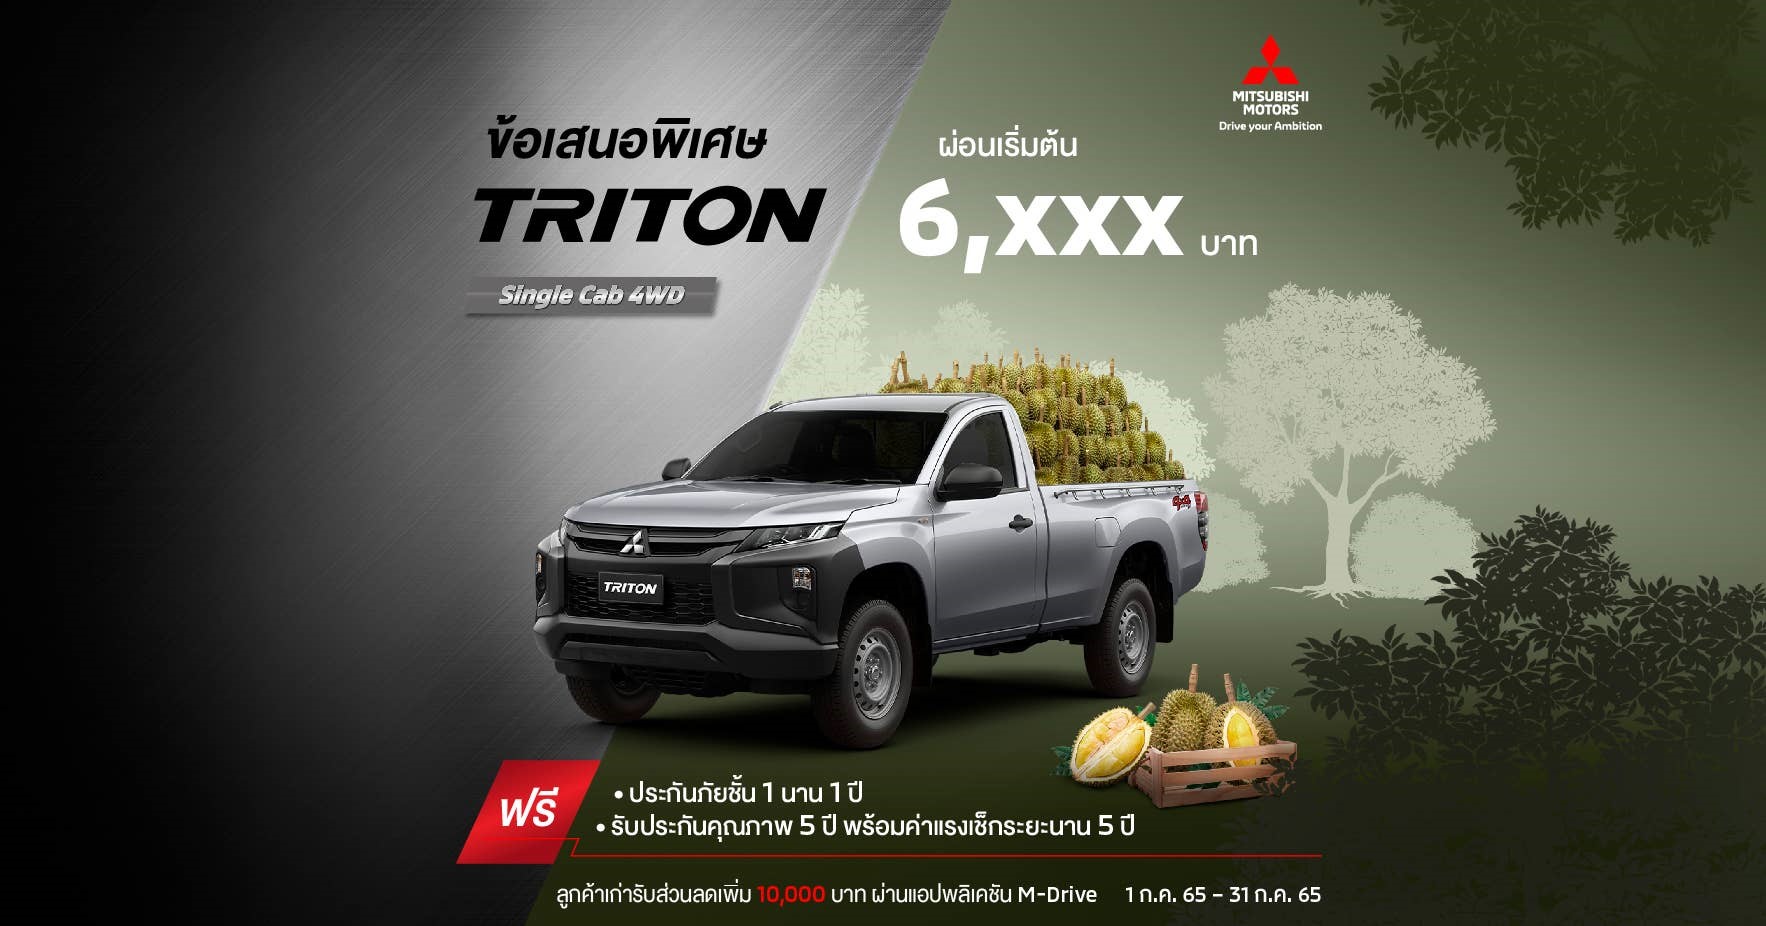 Triton สำหรับรุ่น ซิงเกิ้ล แค็บ (4WD) ผ่อนเริ่มต้น 6,XXX บาท